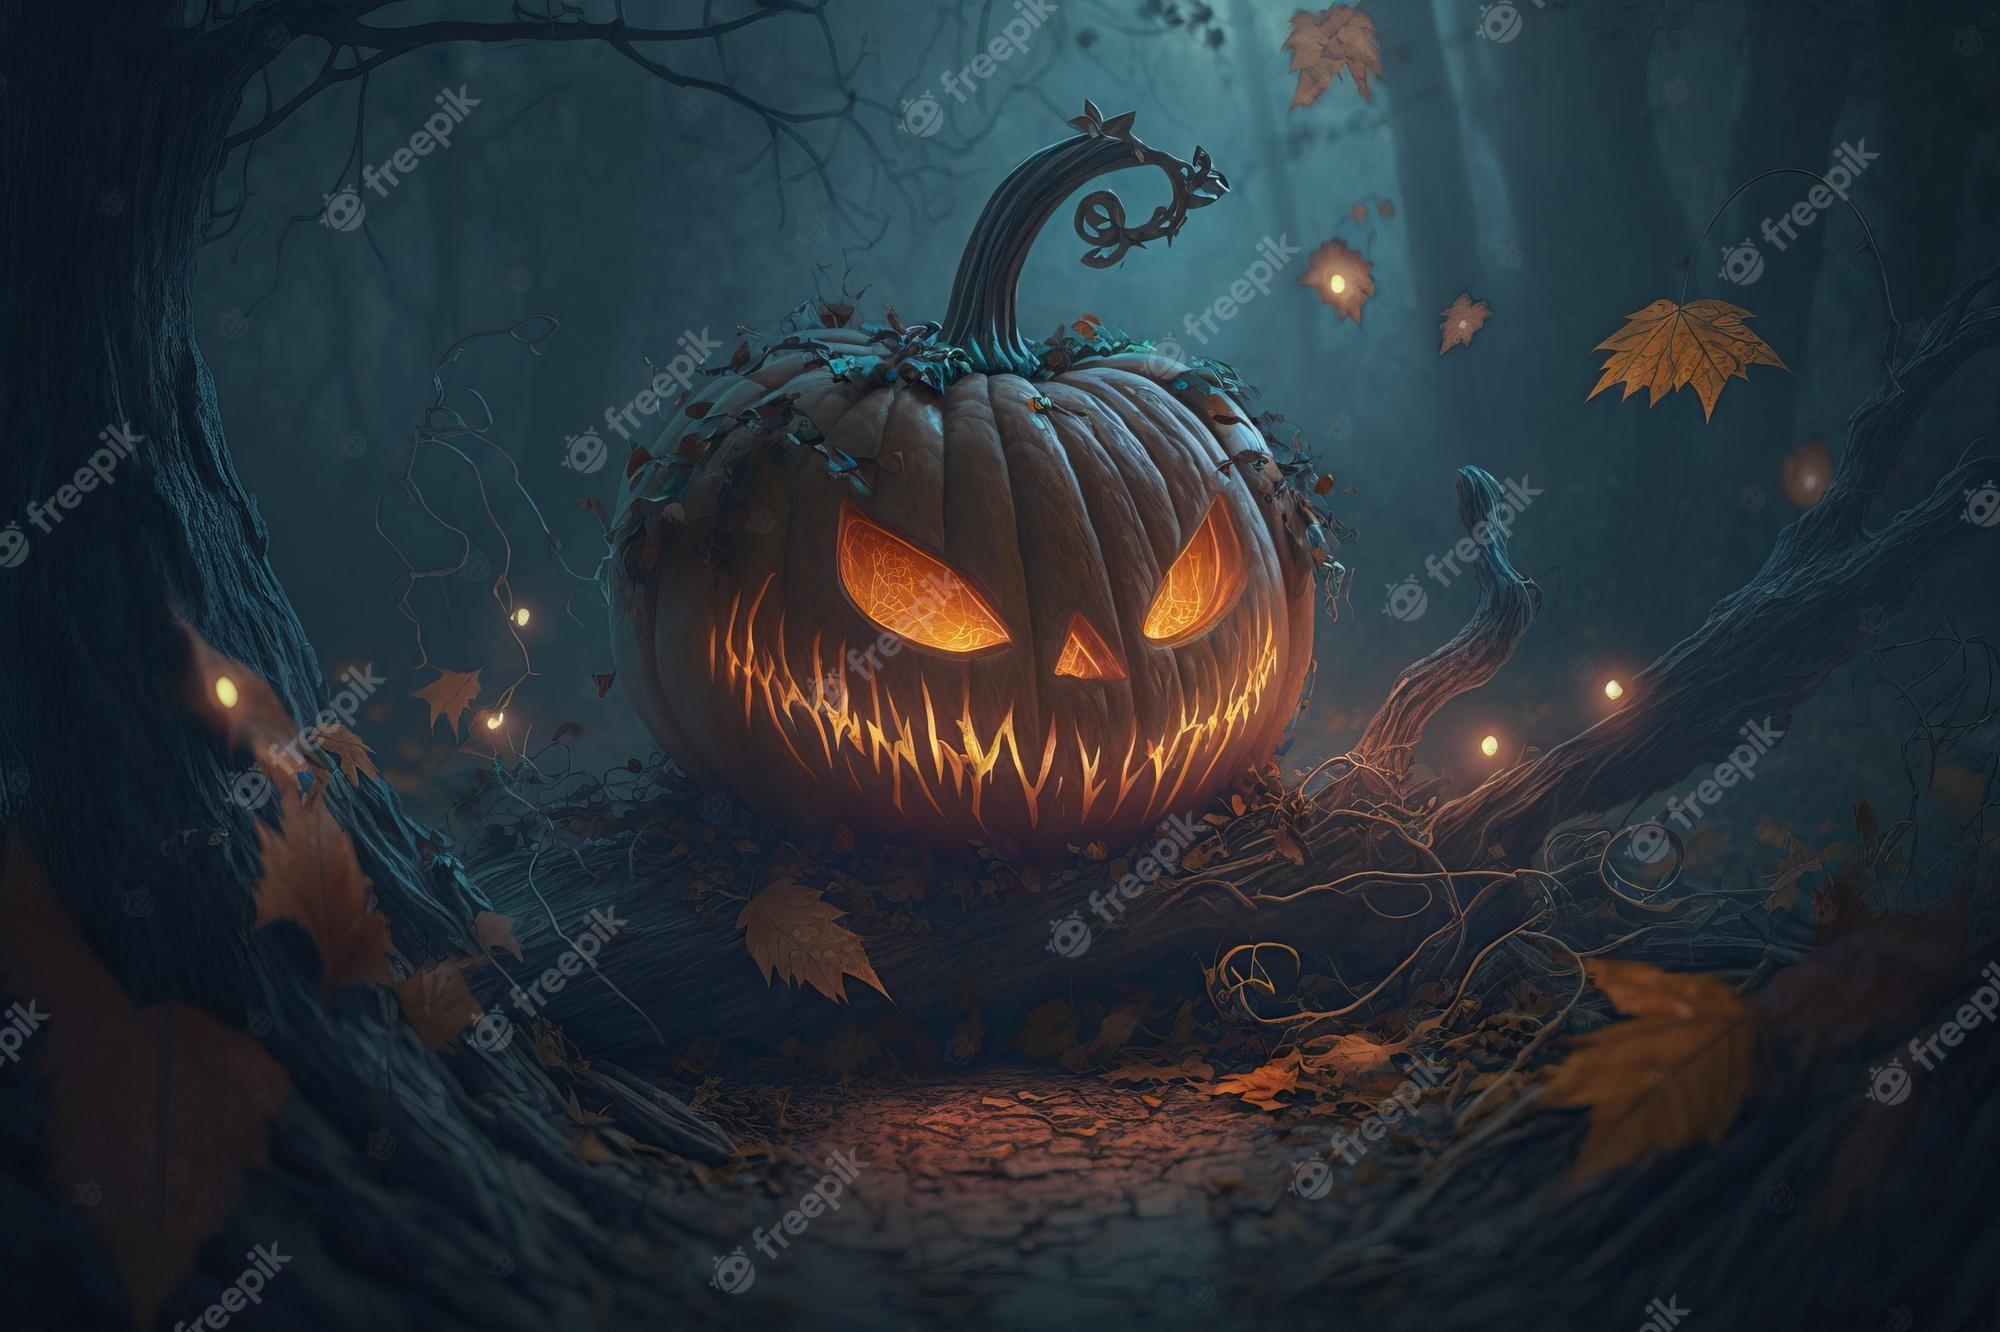 Premium Photo A Halloween Pumpkin In Dark Forest With Leaves